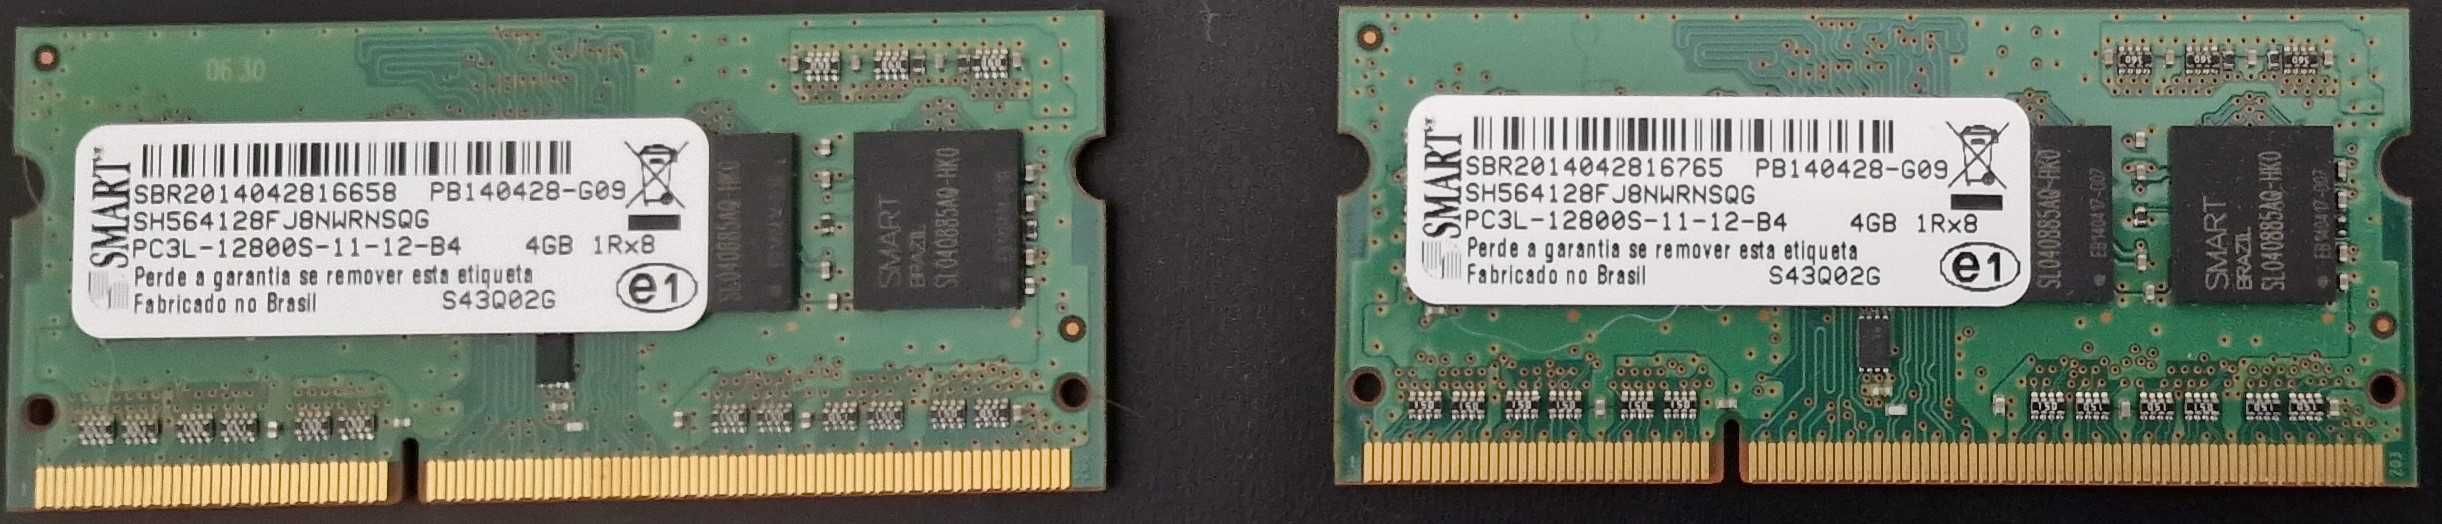 Memória RAM para Portátil DDR3-1600 (PC3L-12800S-11-12-B4)